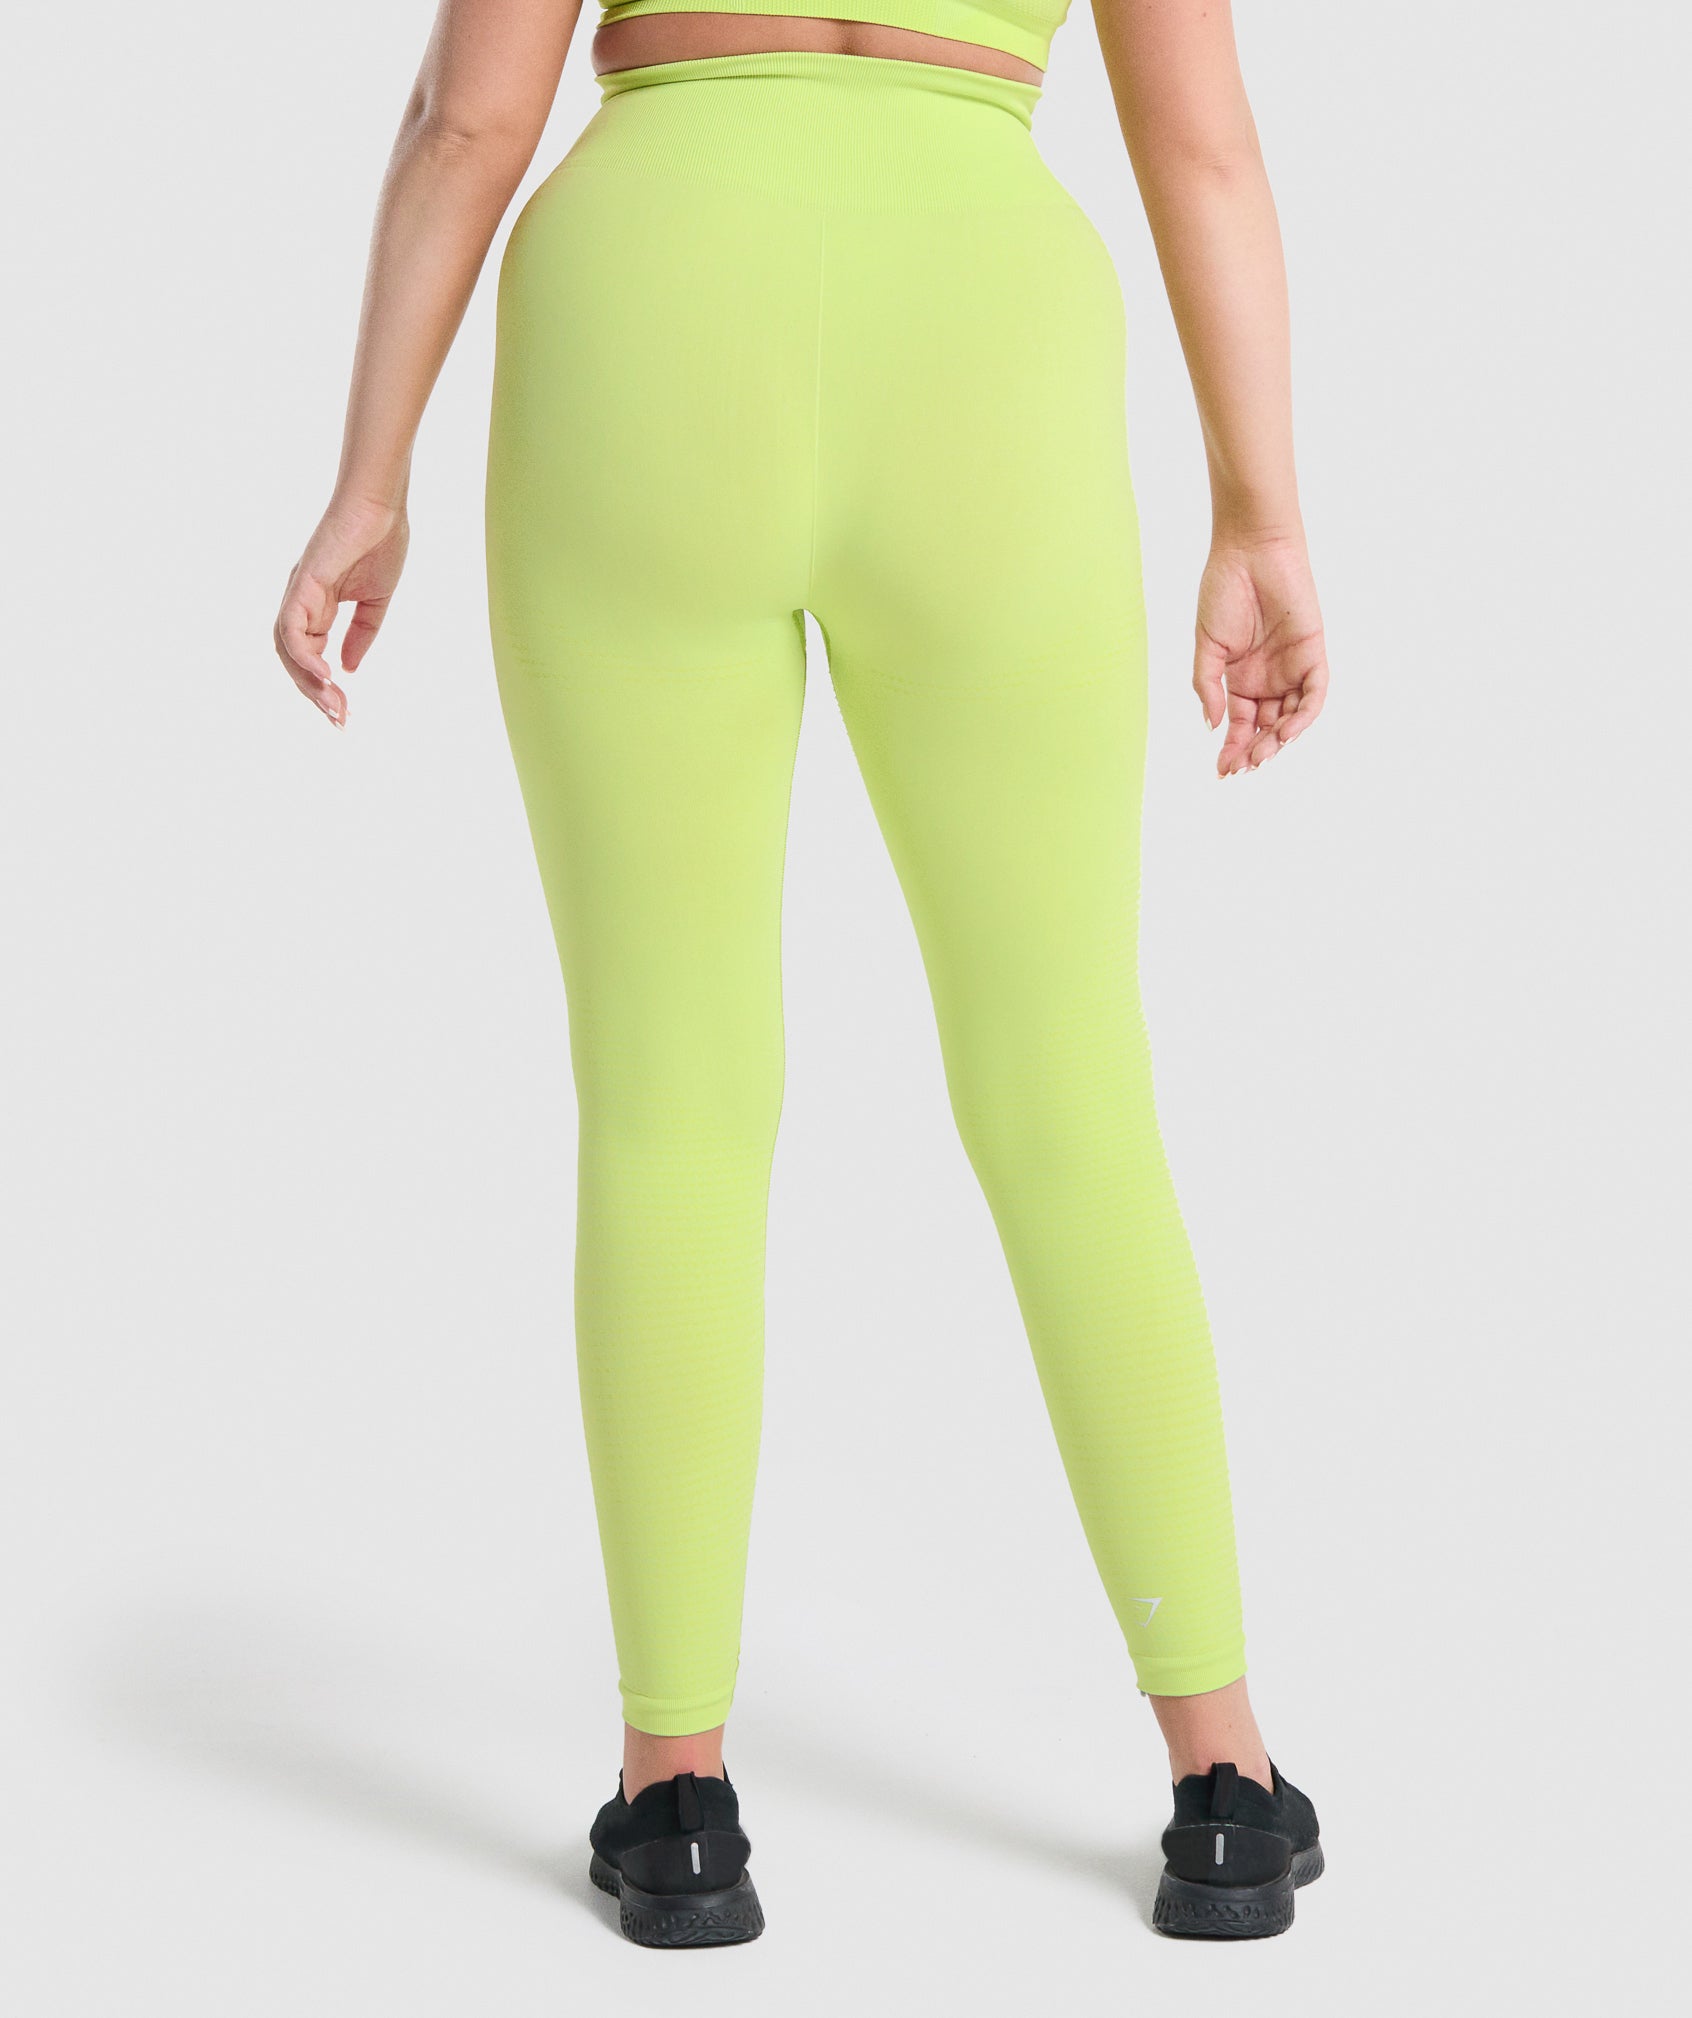 GYMSHARK Crop Top Women's Extra Small XS Neon Green Yellow Mesh